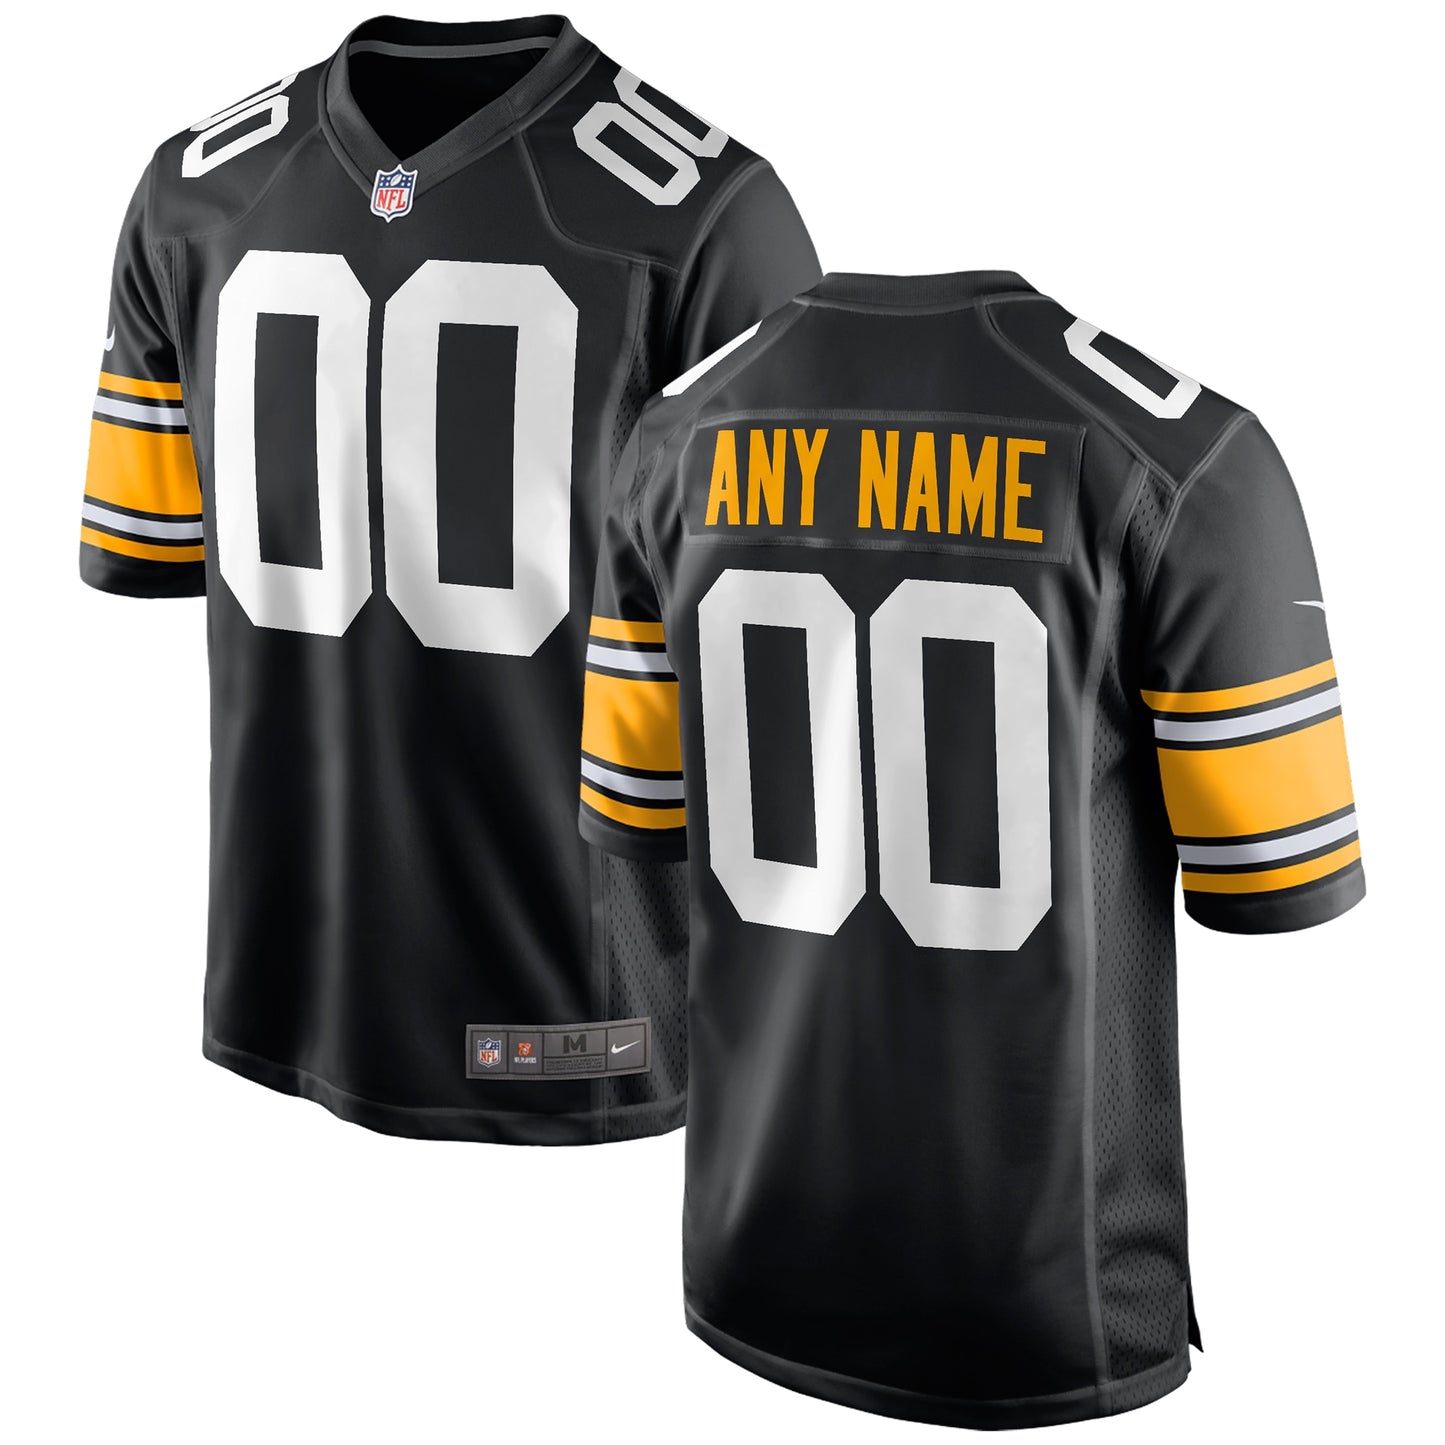 Pittsburgh Steelers Nike Alternate Custom Game Jersey - Black